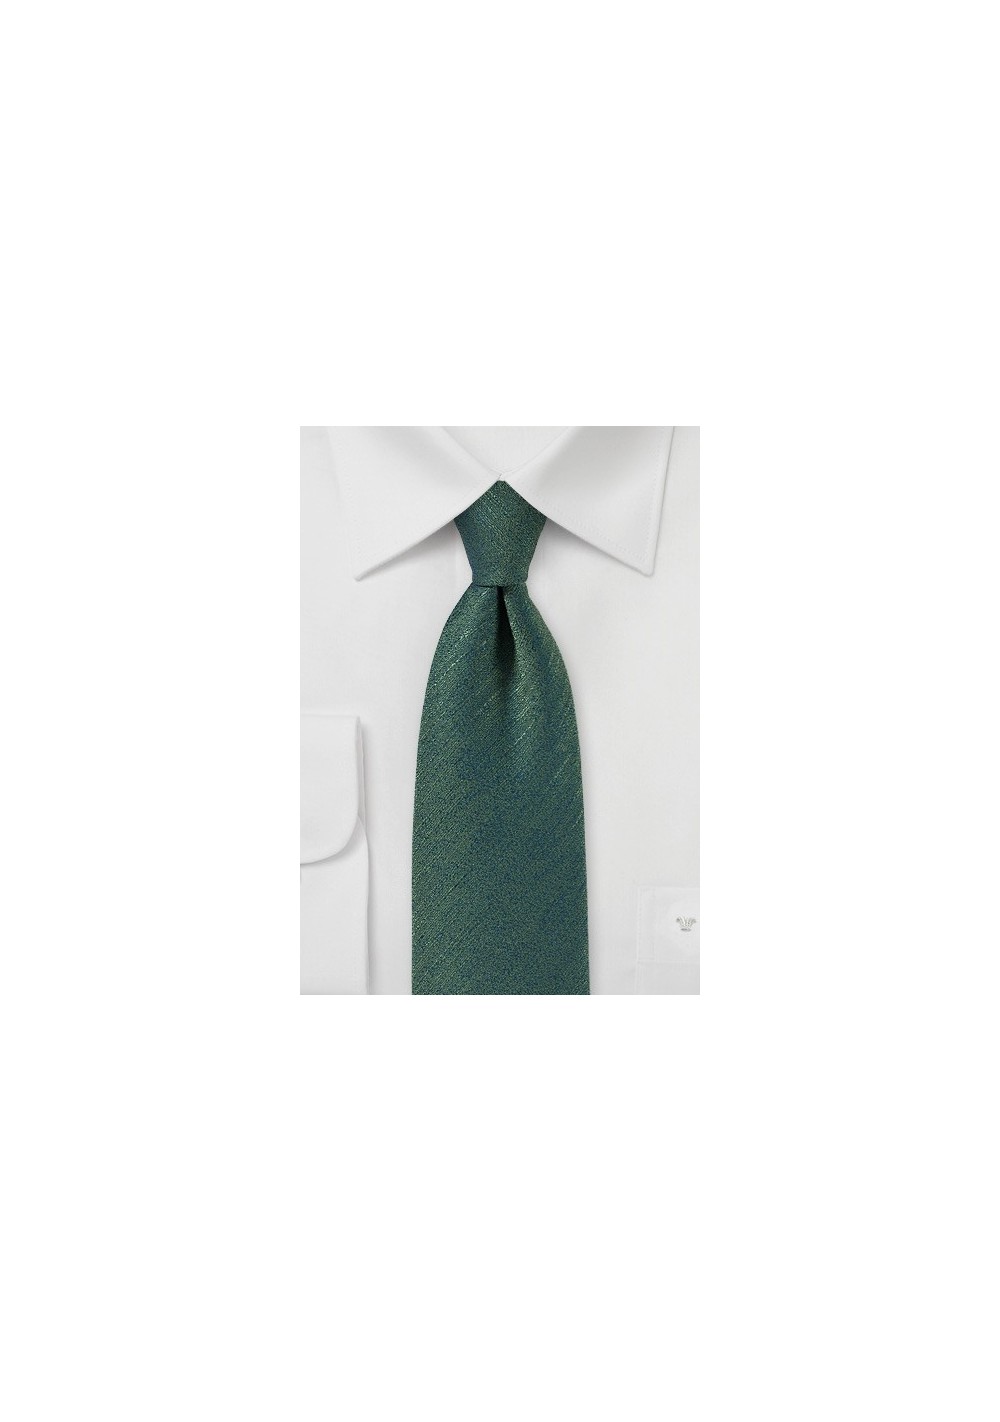 Vintage Textured Tie in Pine Green